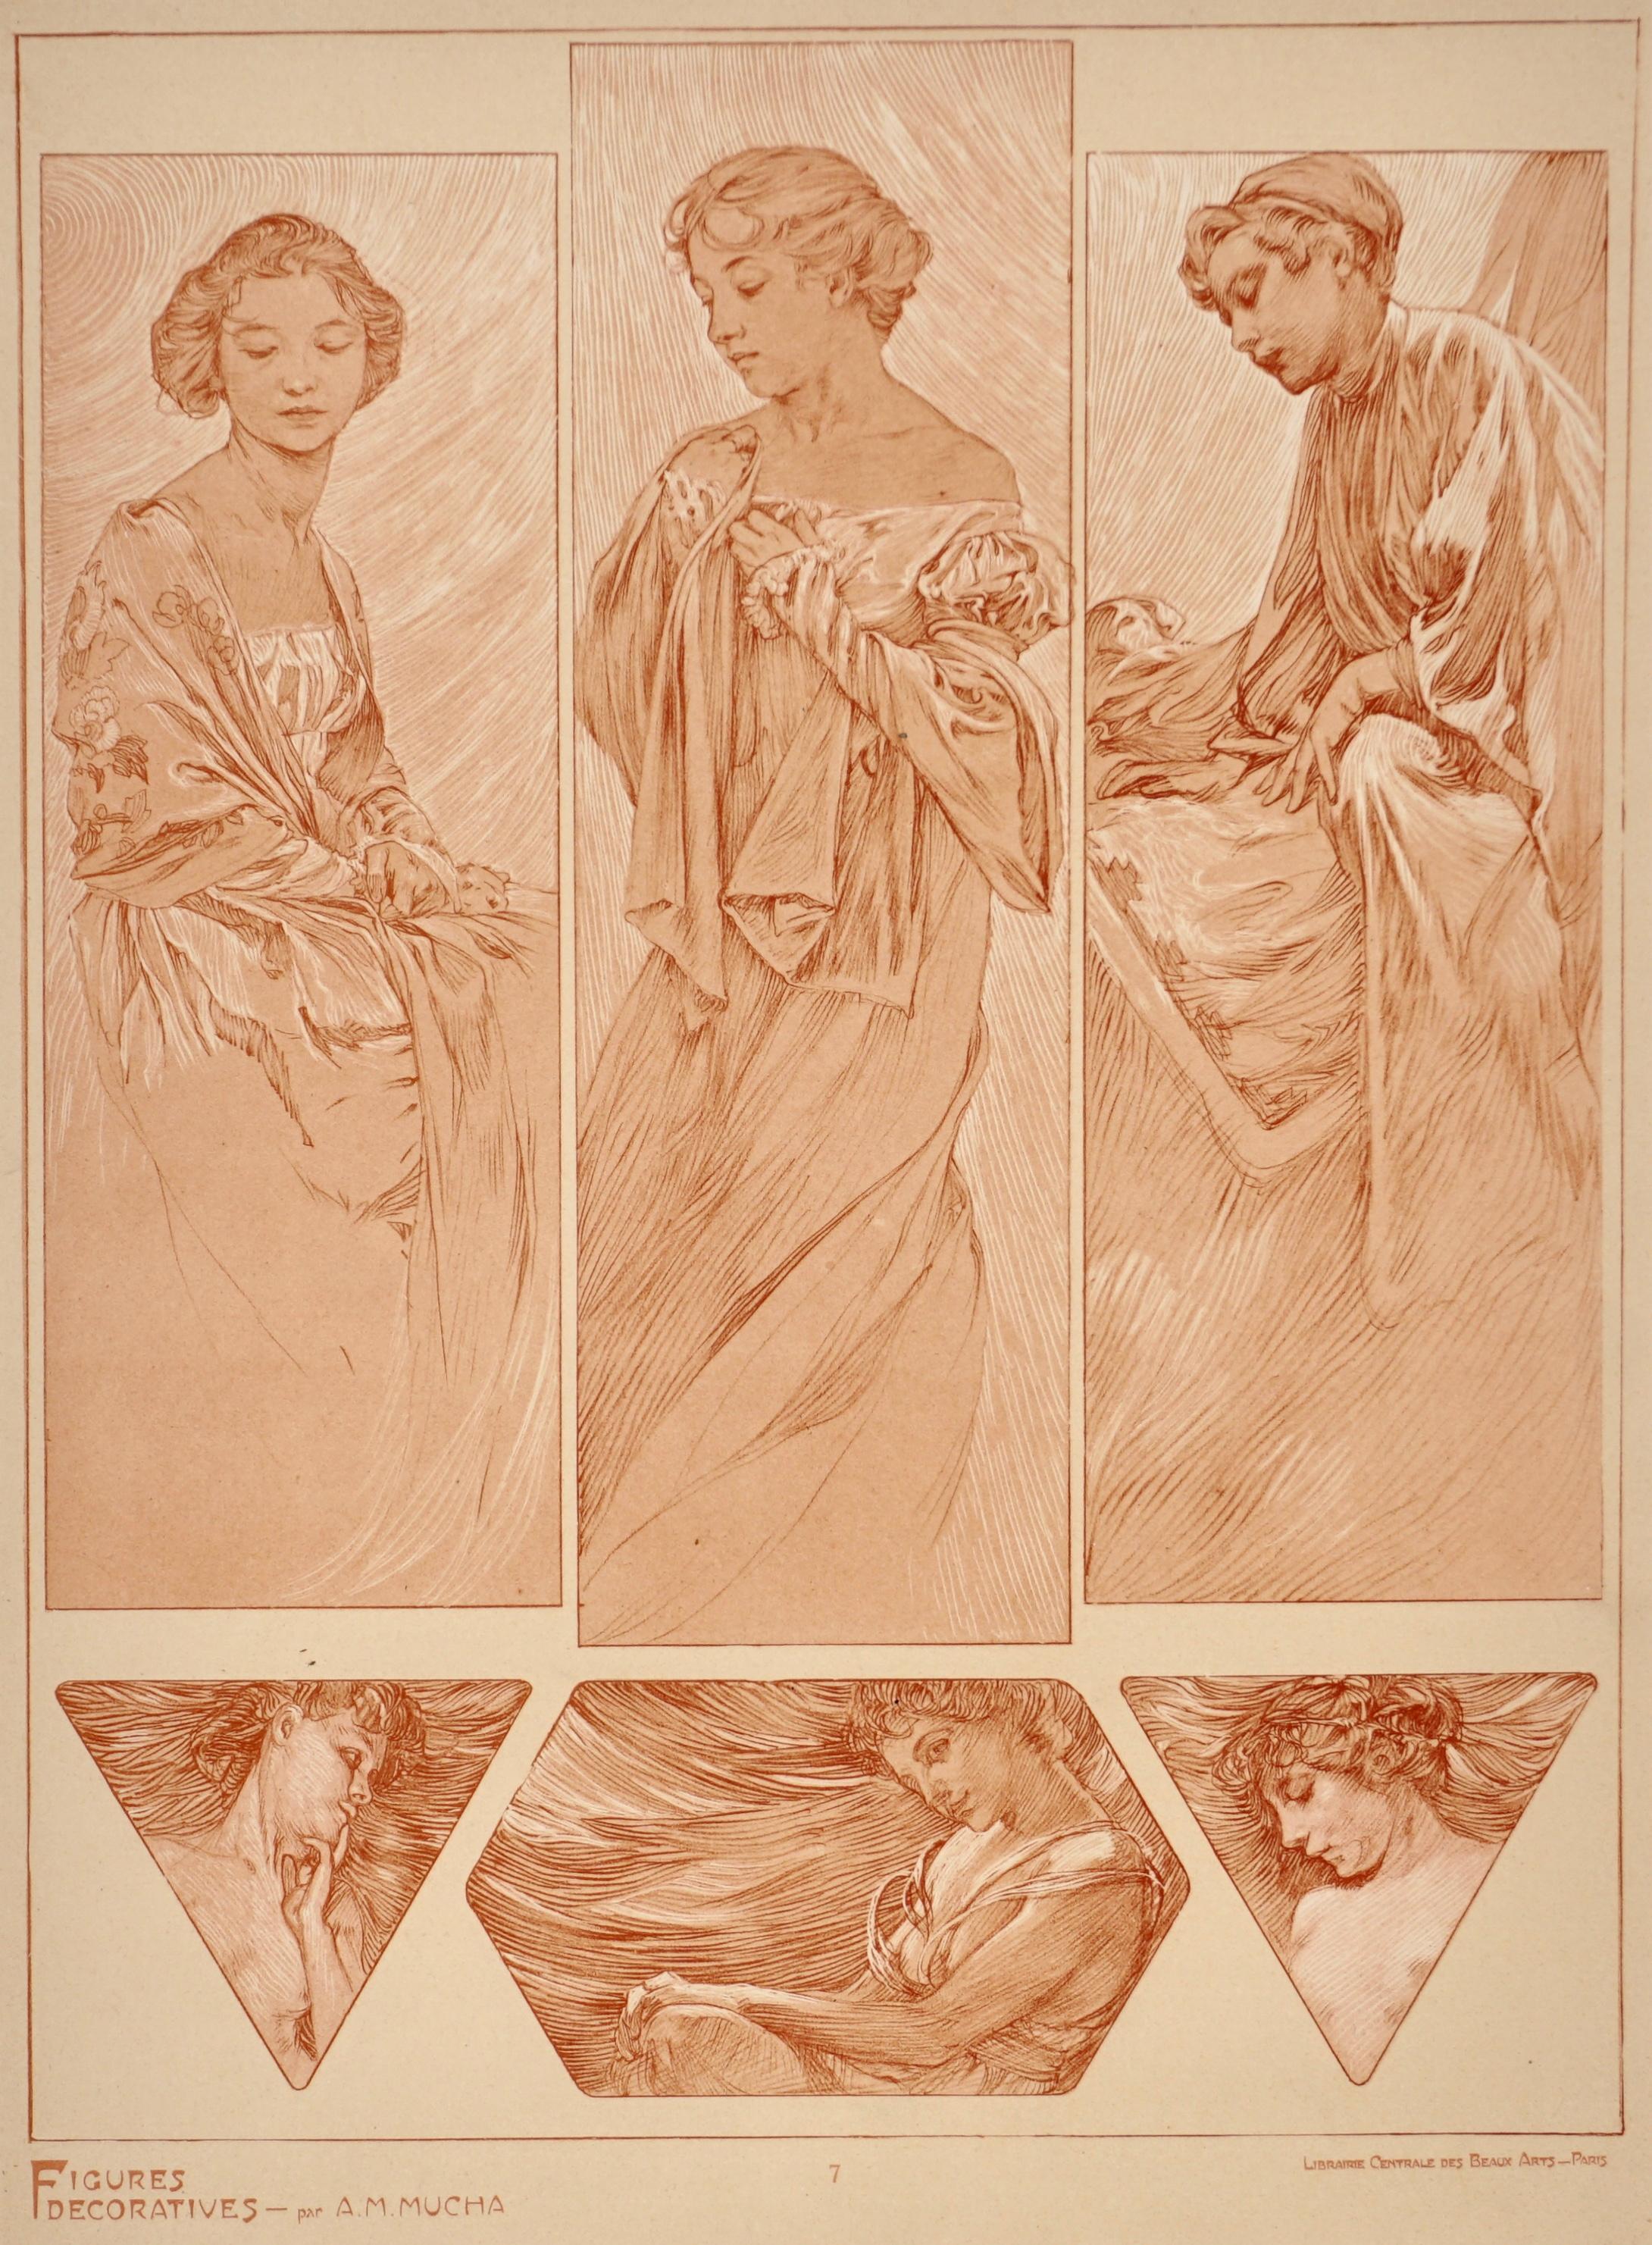 Art Nouveau Alphonse Mucha Figures Decoratives Poster Plate 7